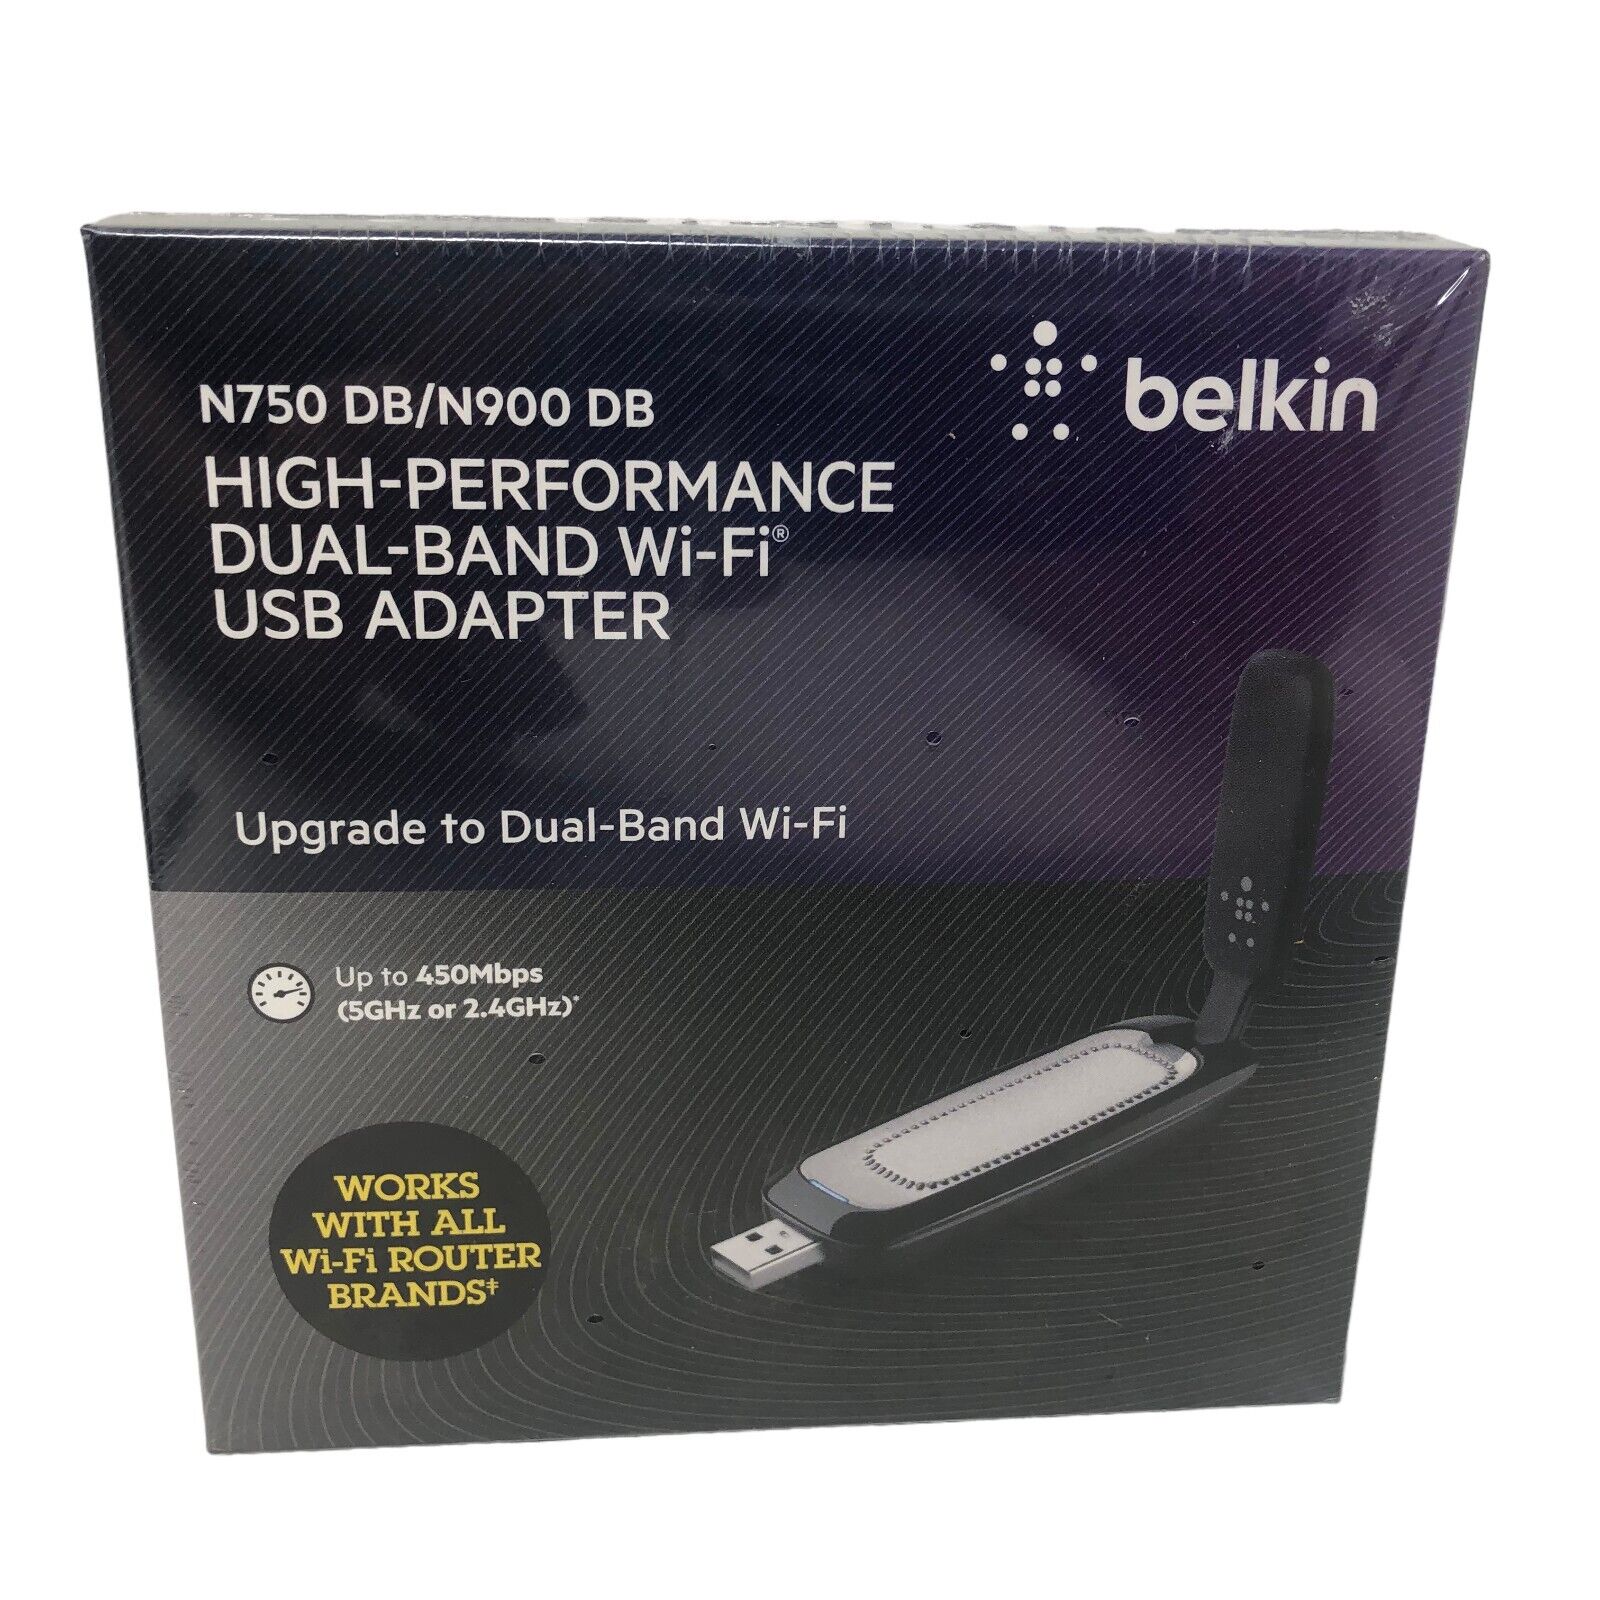 NIP Belkin N750 DB/N900 DB High-Performance Dual-Band WiFi USB Adapter Sealed